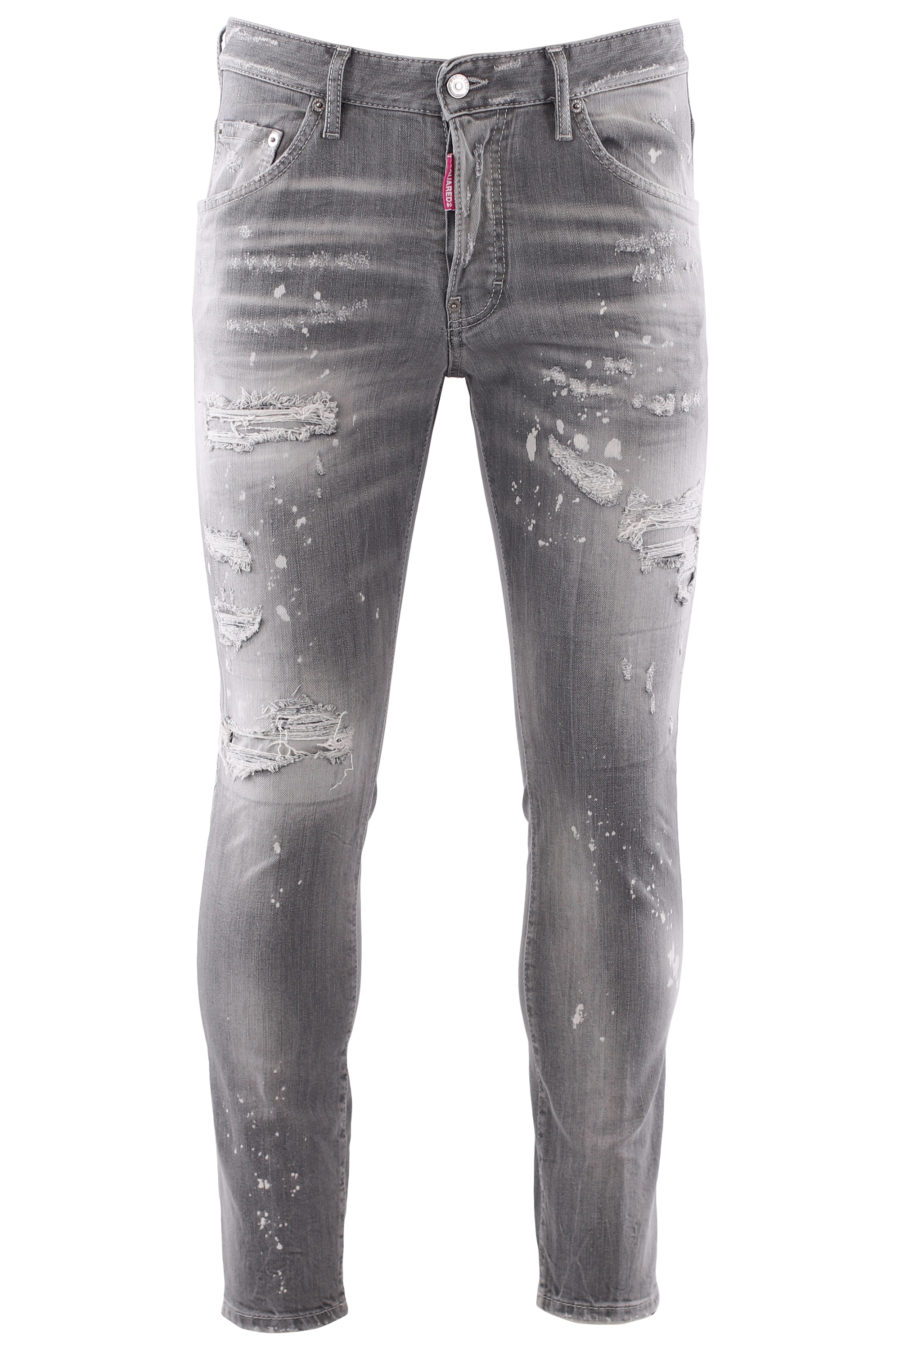 Jeans "Skaterjeans" grau getragen - IMG 6693